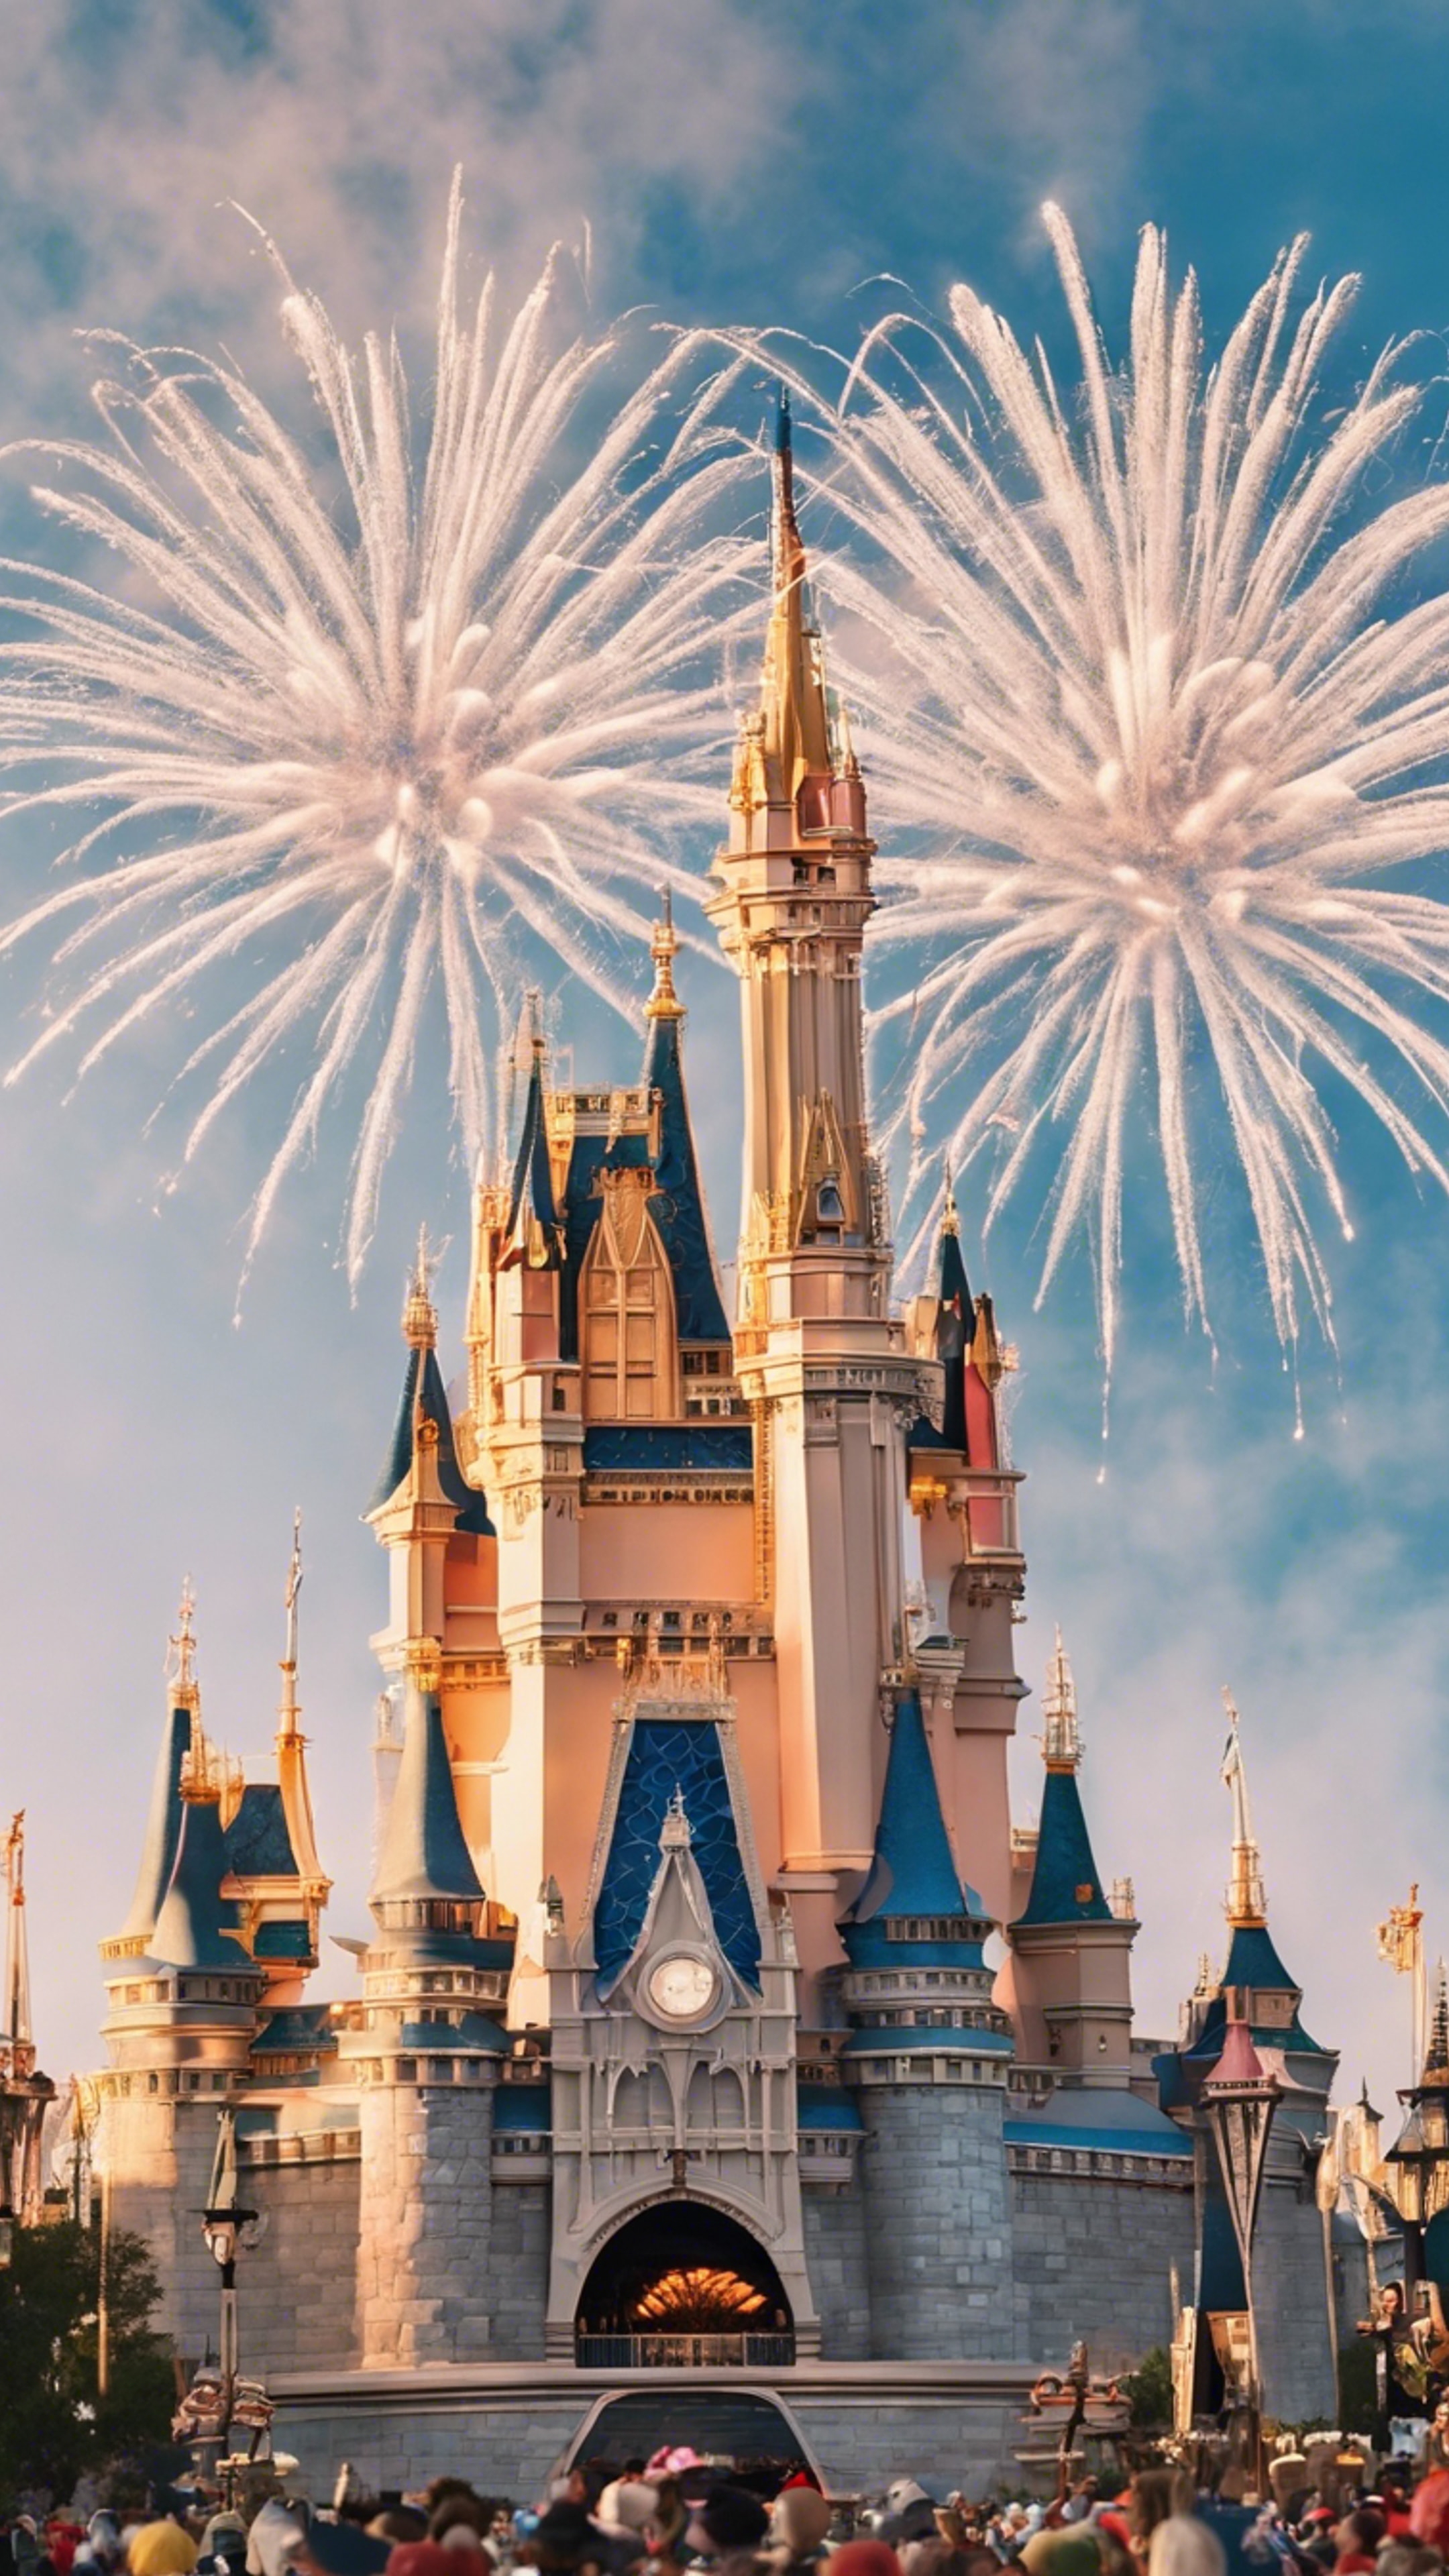 A dazzling firework display over Disney's Magic Kingdom, as seen from the Main Street U.S.A. Wallpaper[06ea505dccb744c89f0a]